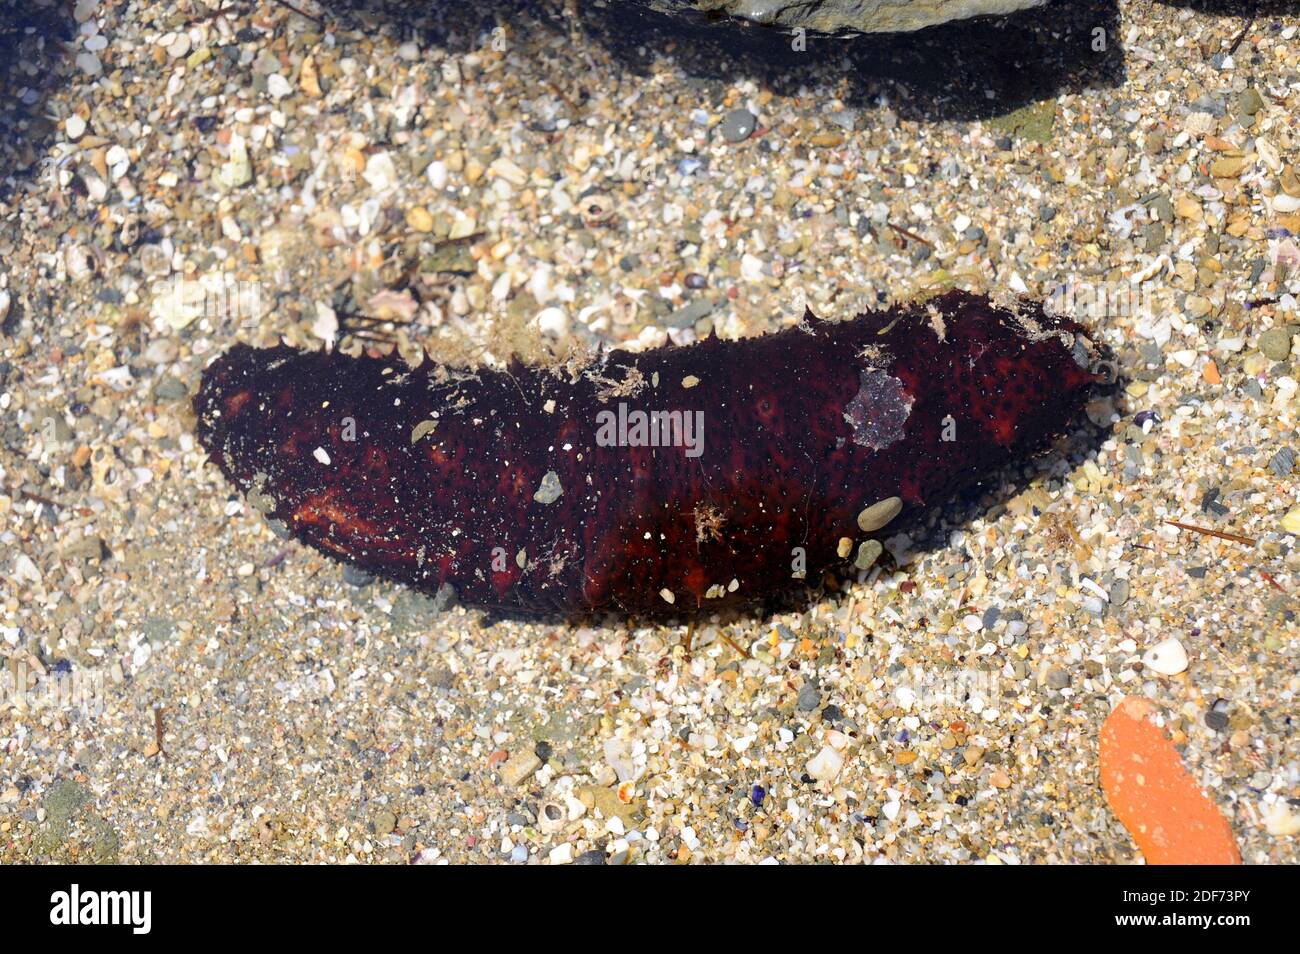 Tubular sea cucumber (Holothuria tubulosa) is a species of sea cucumber feeds on detritus and plankton. This photo was taken in Cap Creus, Girona Stock Photo